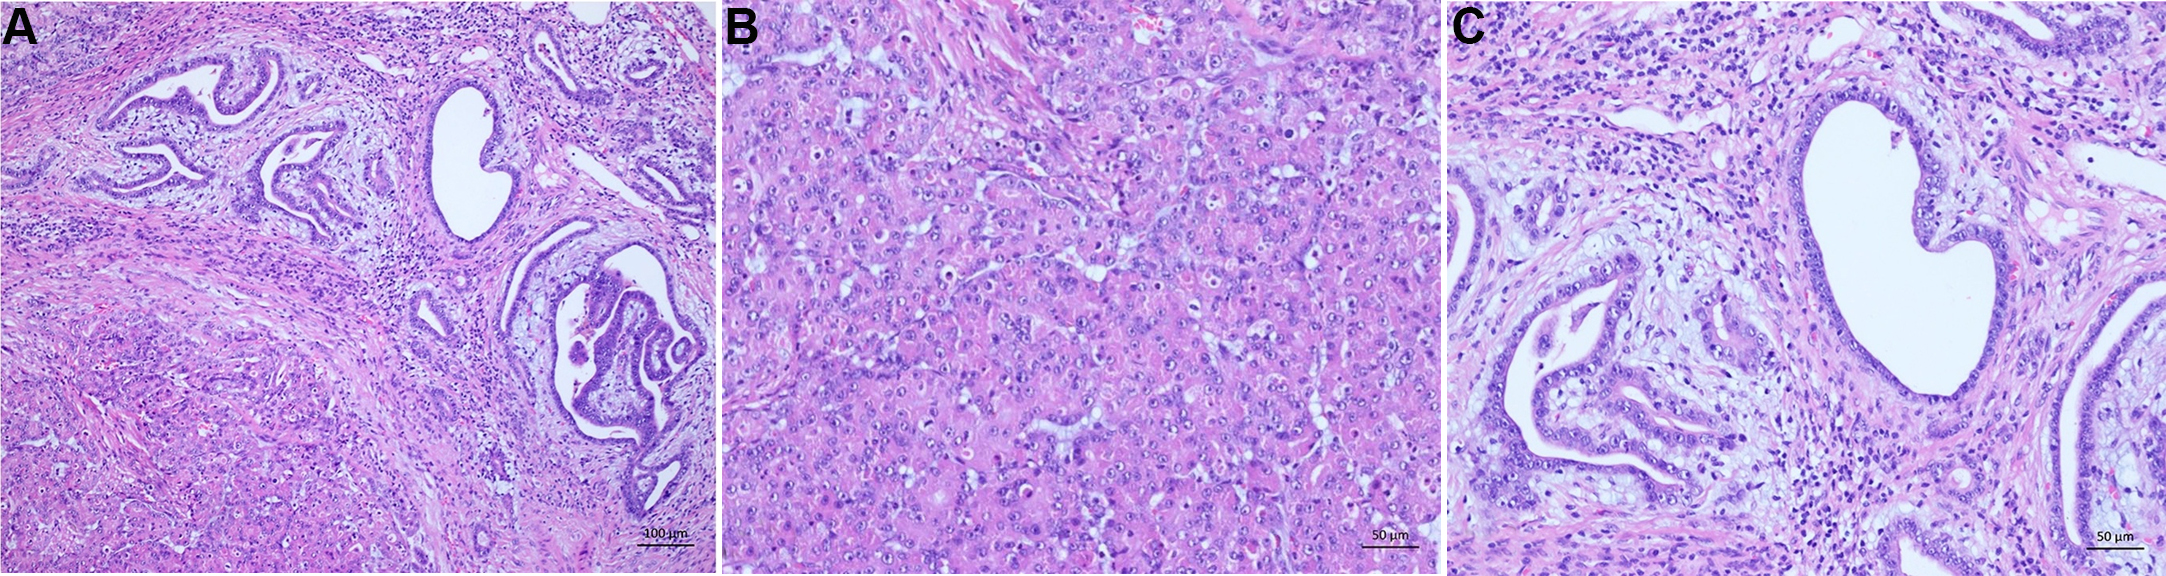 hepatocellular carcinoma histology